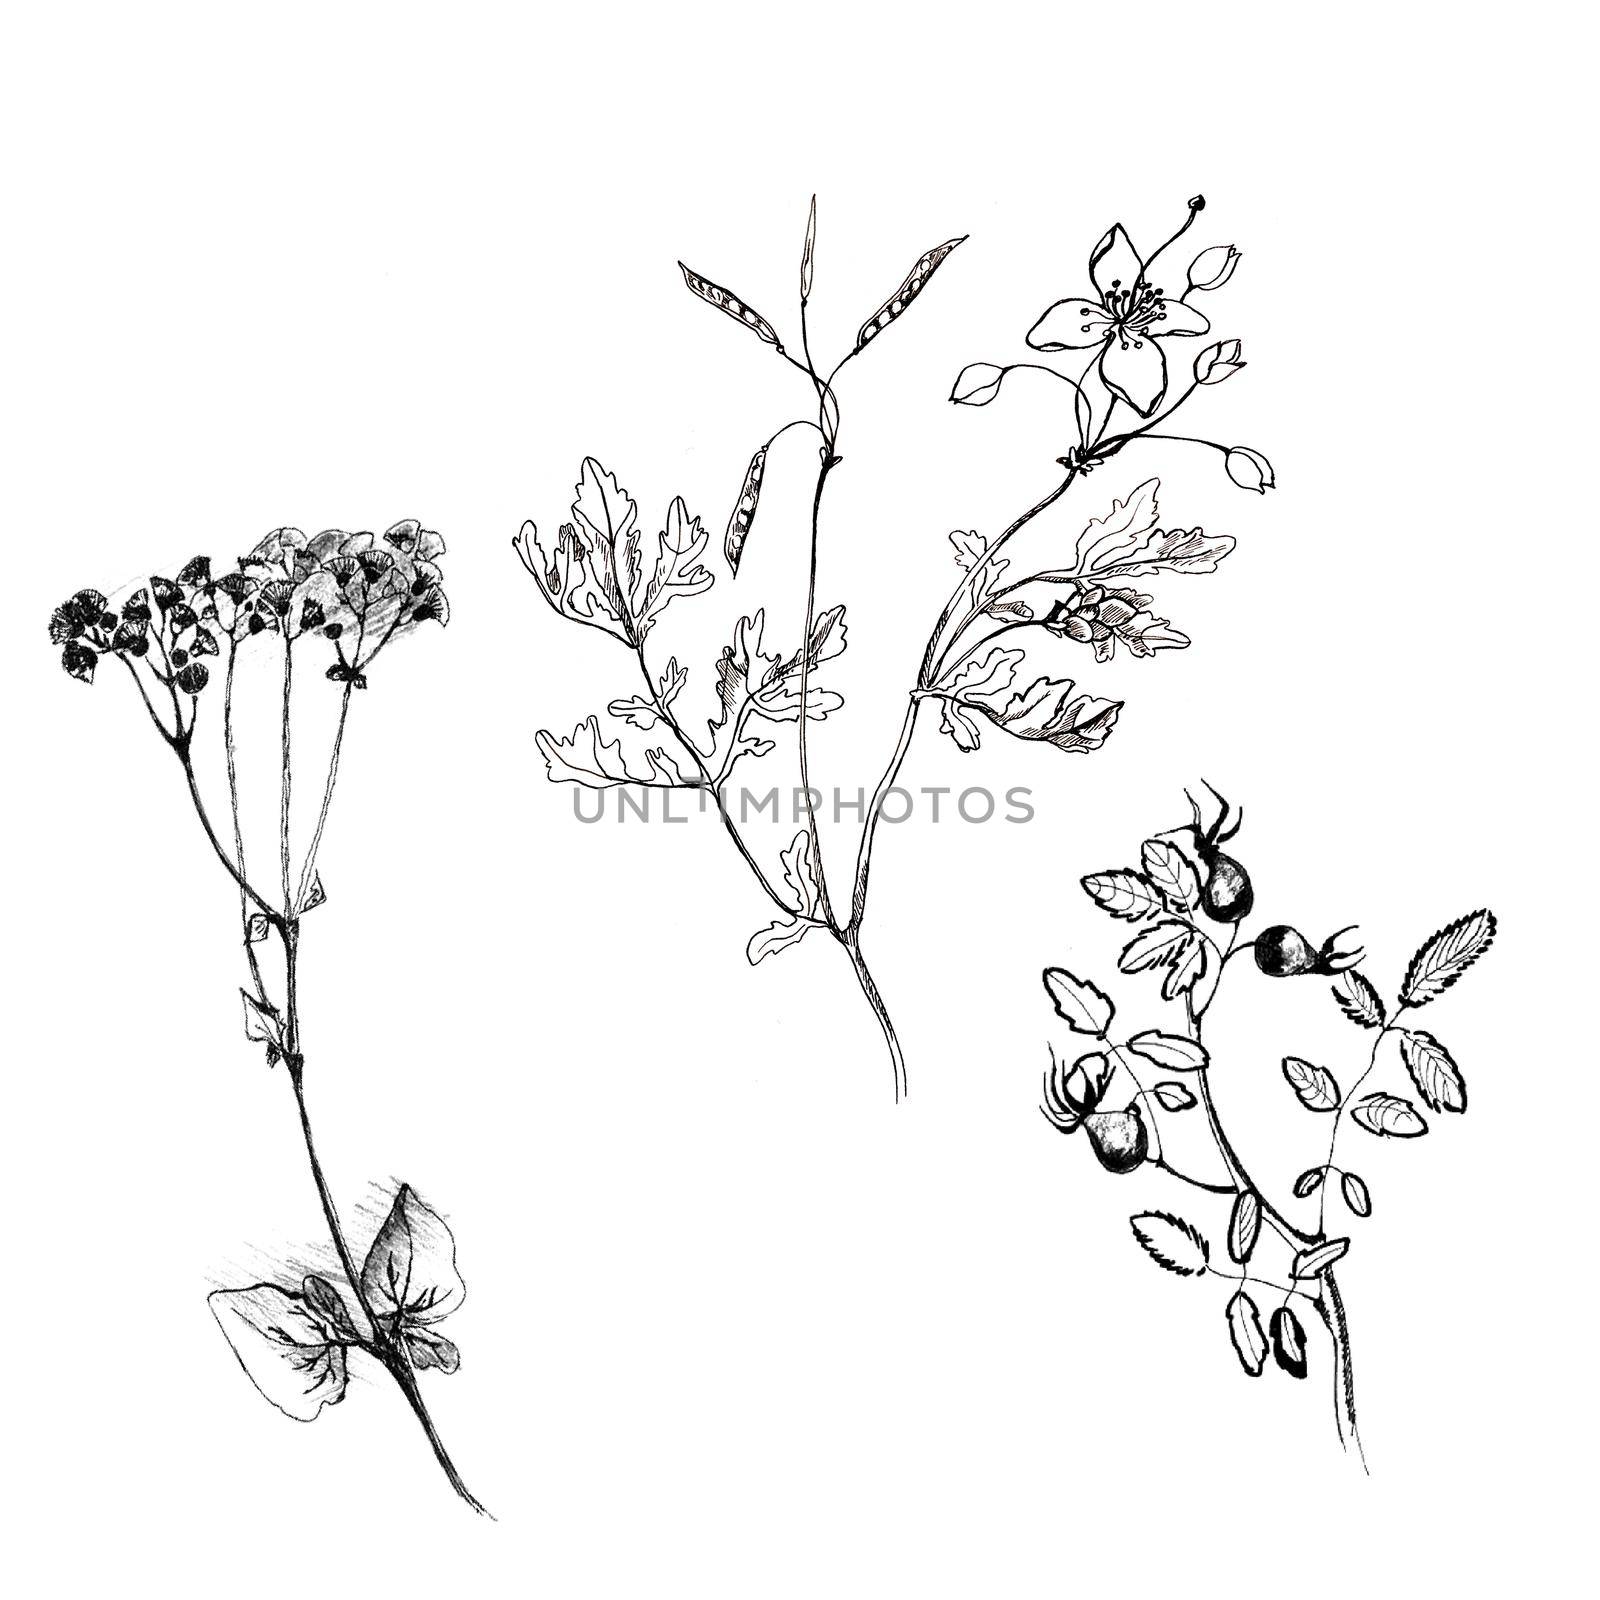 Celandine, roseship flower set hand drawn graphic botanical illustration, doodle ink sketch isolated on white, medical plant, contour style, line art for greeting card, invitation, medicine, design cosmetic